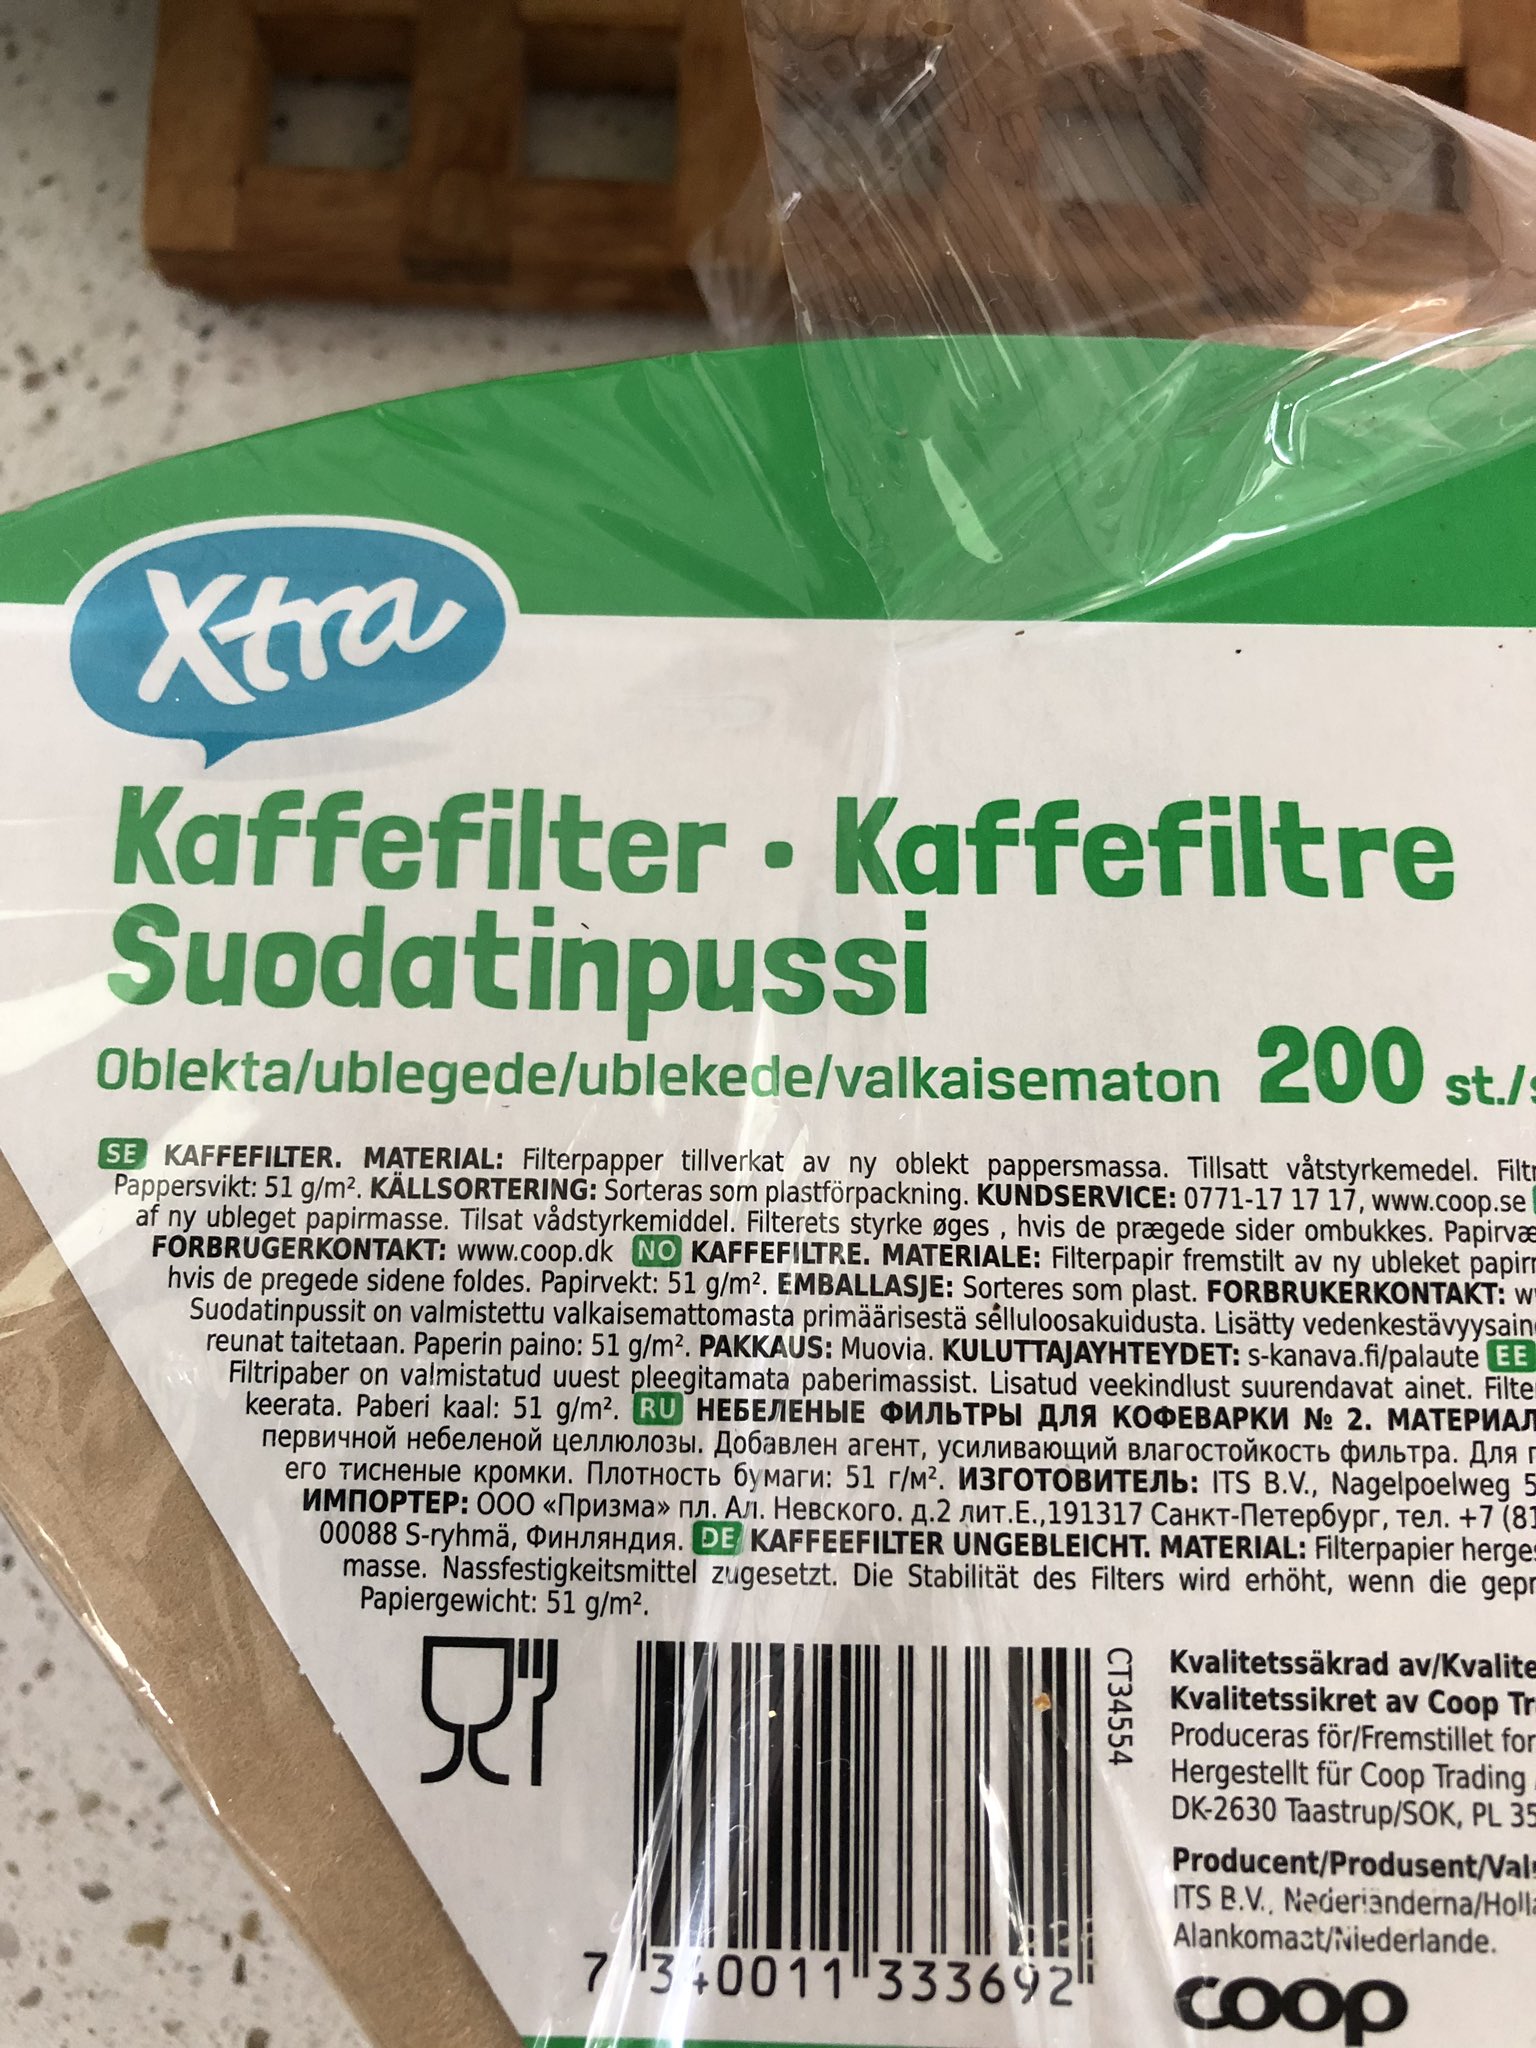 Konvention omfavne plast Brian Nygaard on Twitter: "Nå, men hvad hedder kaffefiltre så på finsk?  https://t.co/kcY3ccTOr5" / Twitter